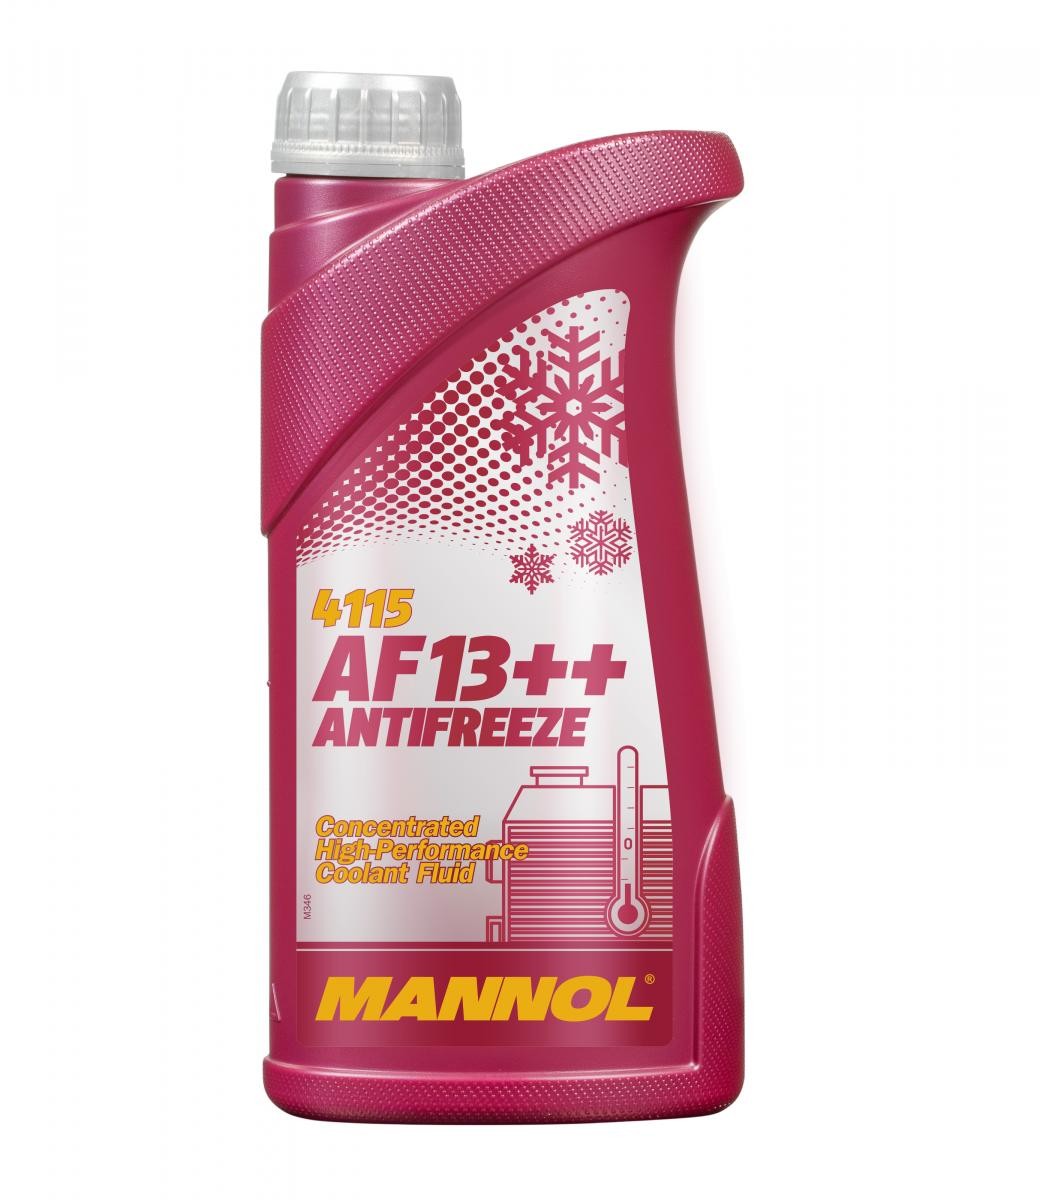 Nemrznoucí směs MANNOL AF13++, High-performance MN4115-1